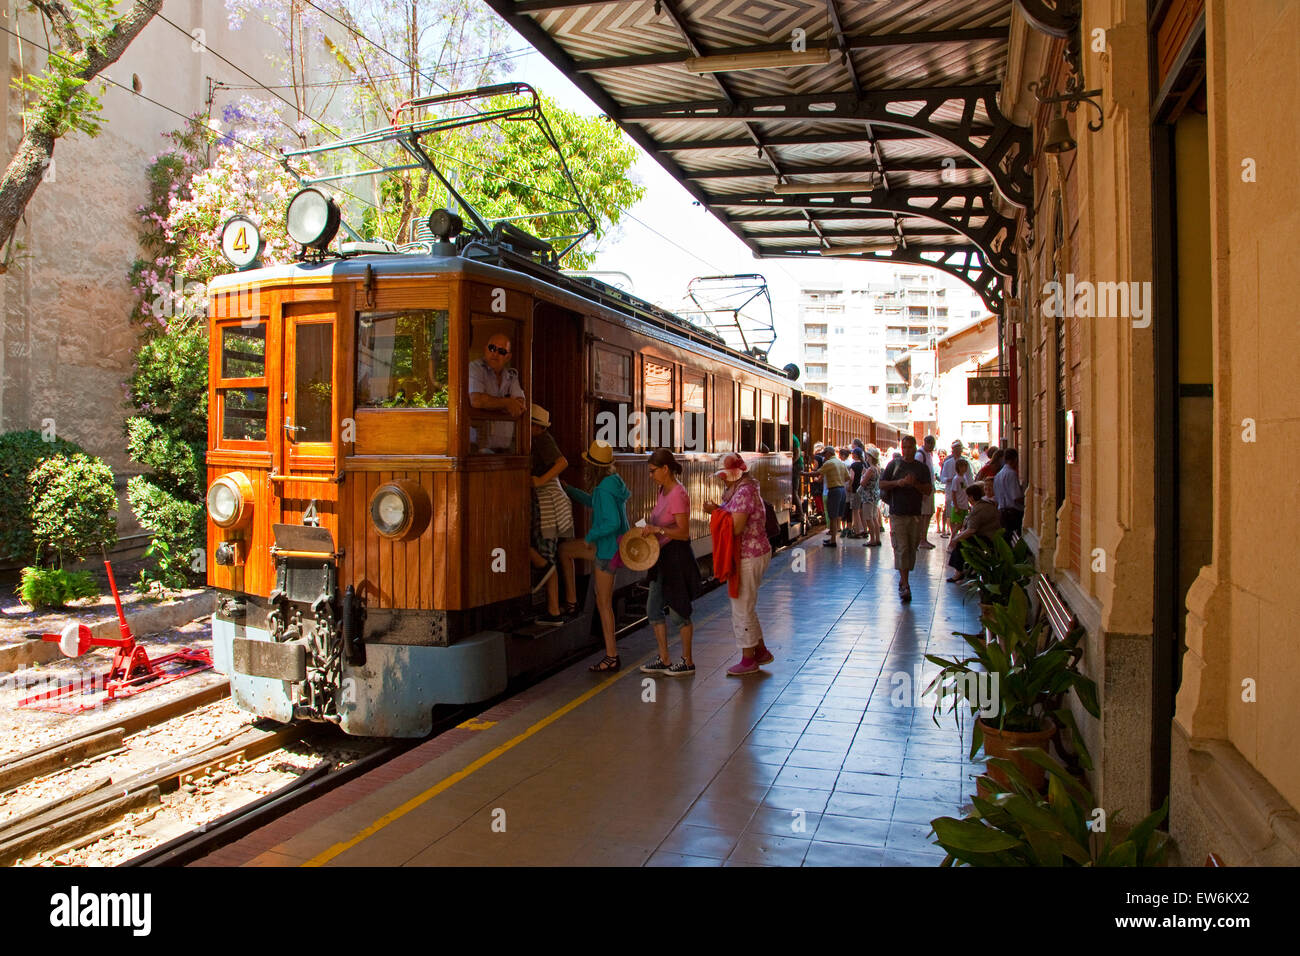 Tren de Soller in Palma station Majorca Stock Photo